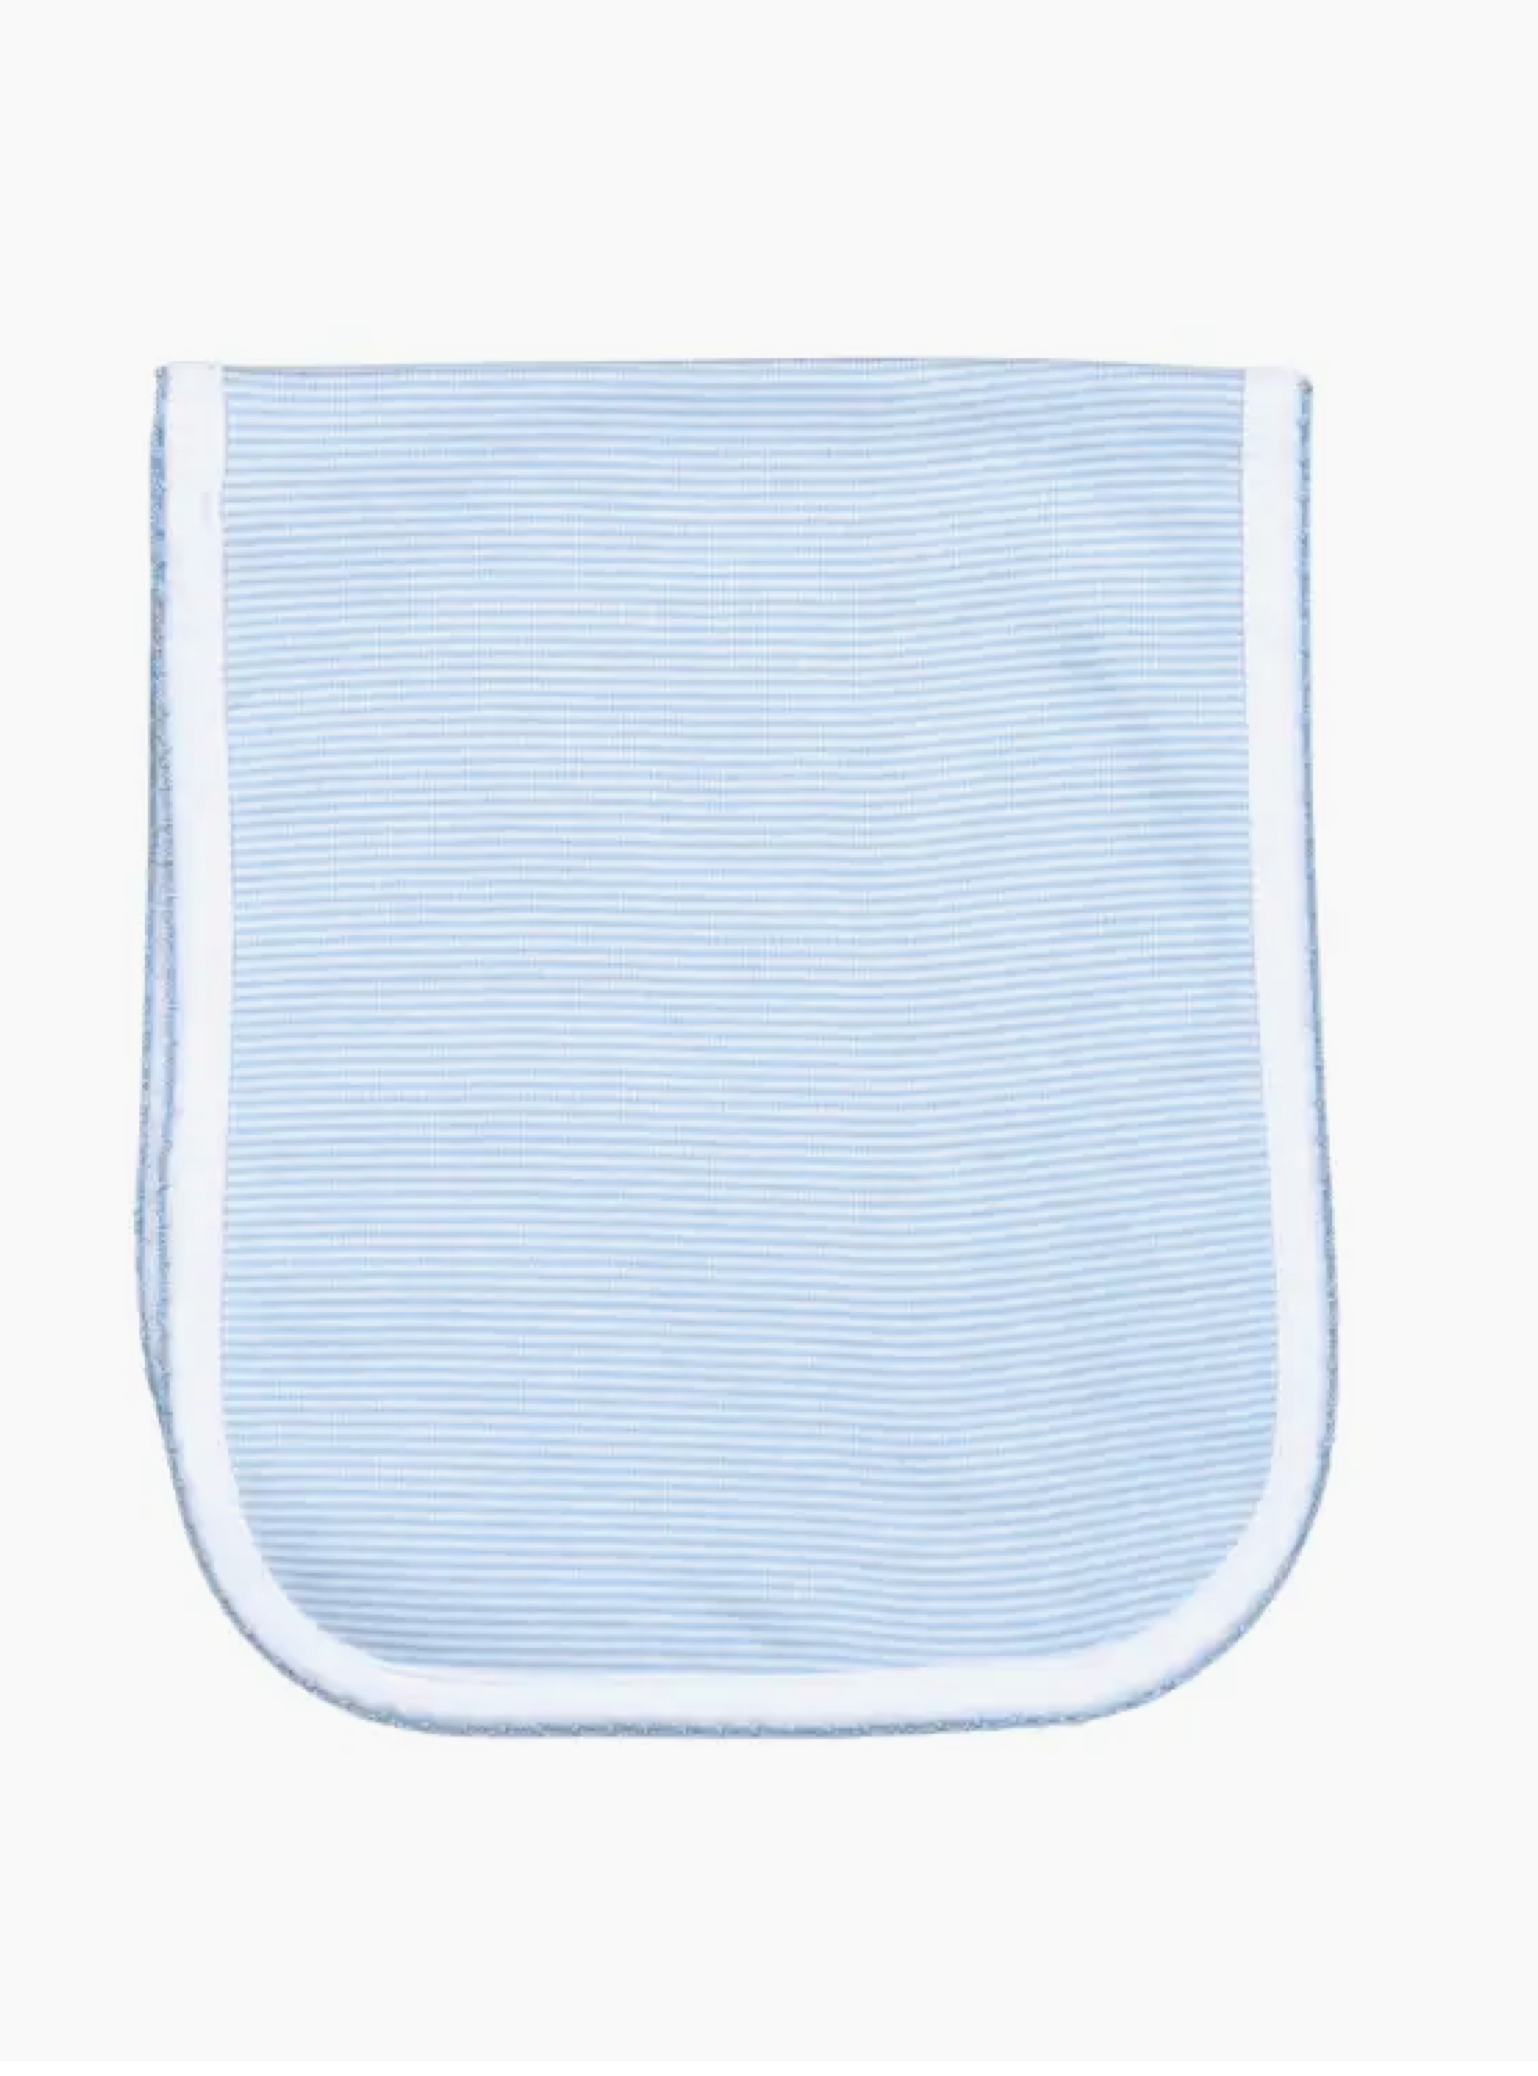 Baby Loren: Blue Stripes Burp Cloth